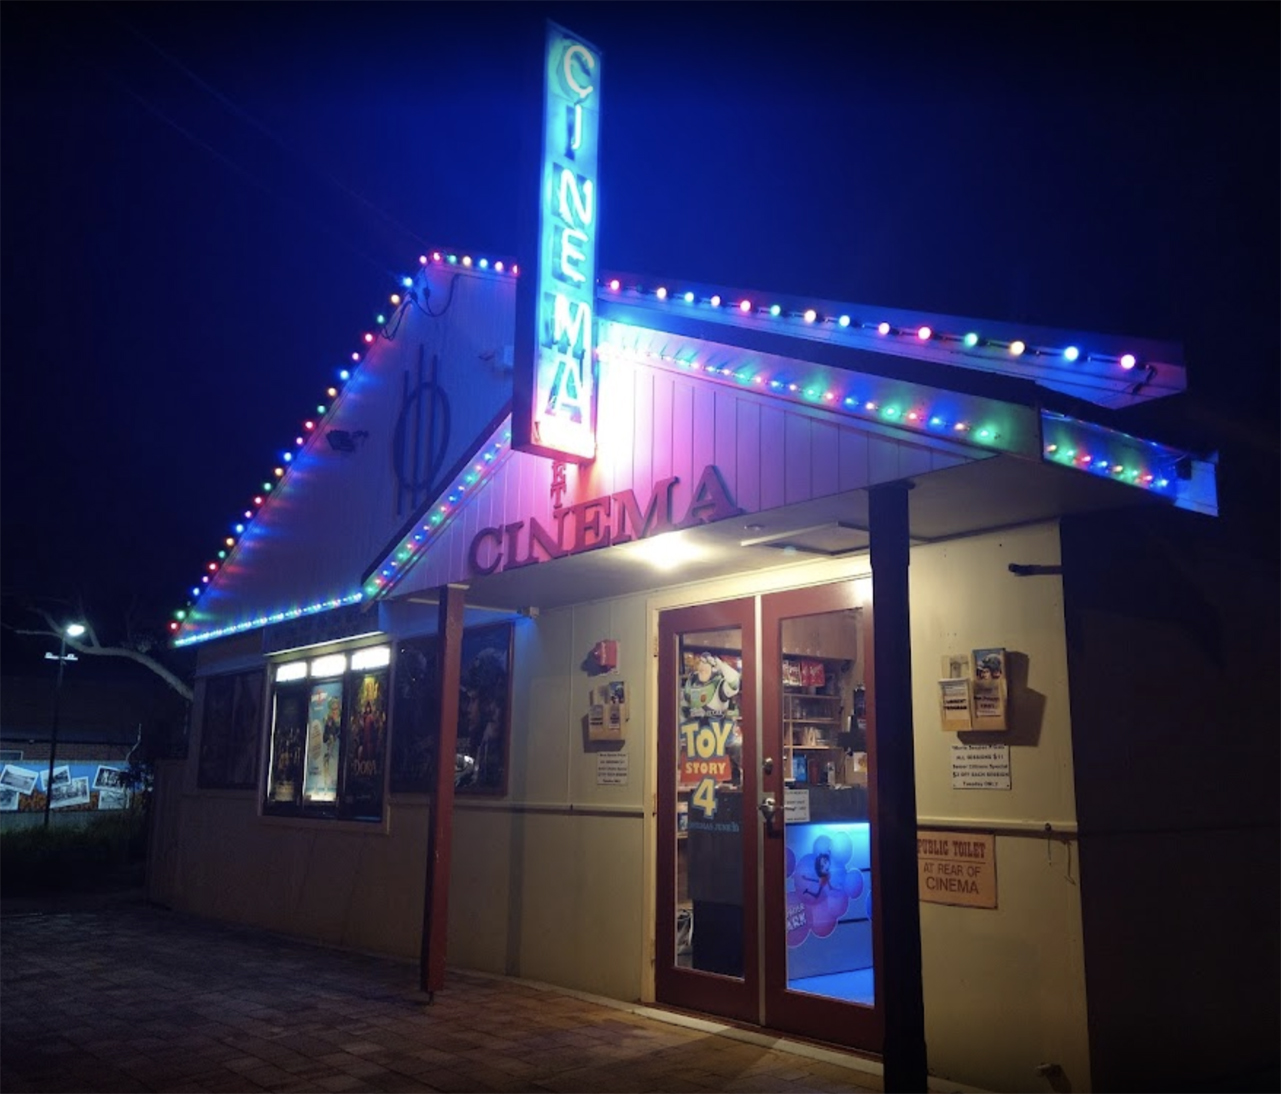 Historic Inlet Cinema